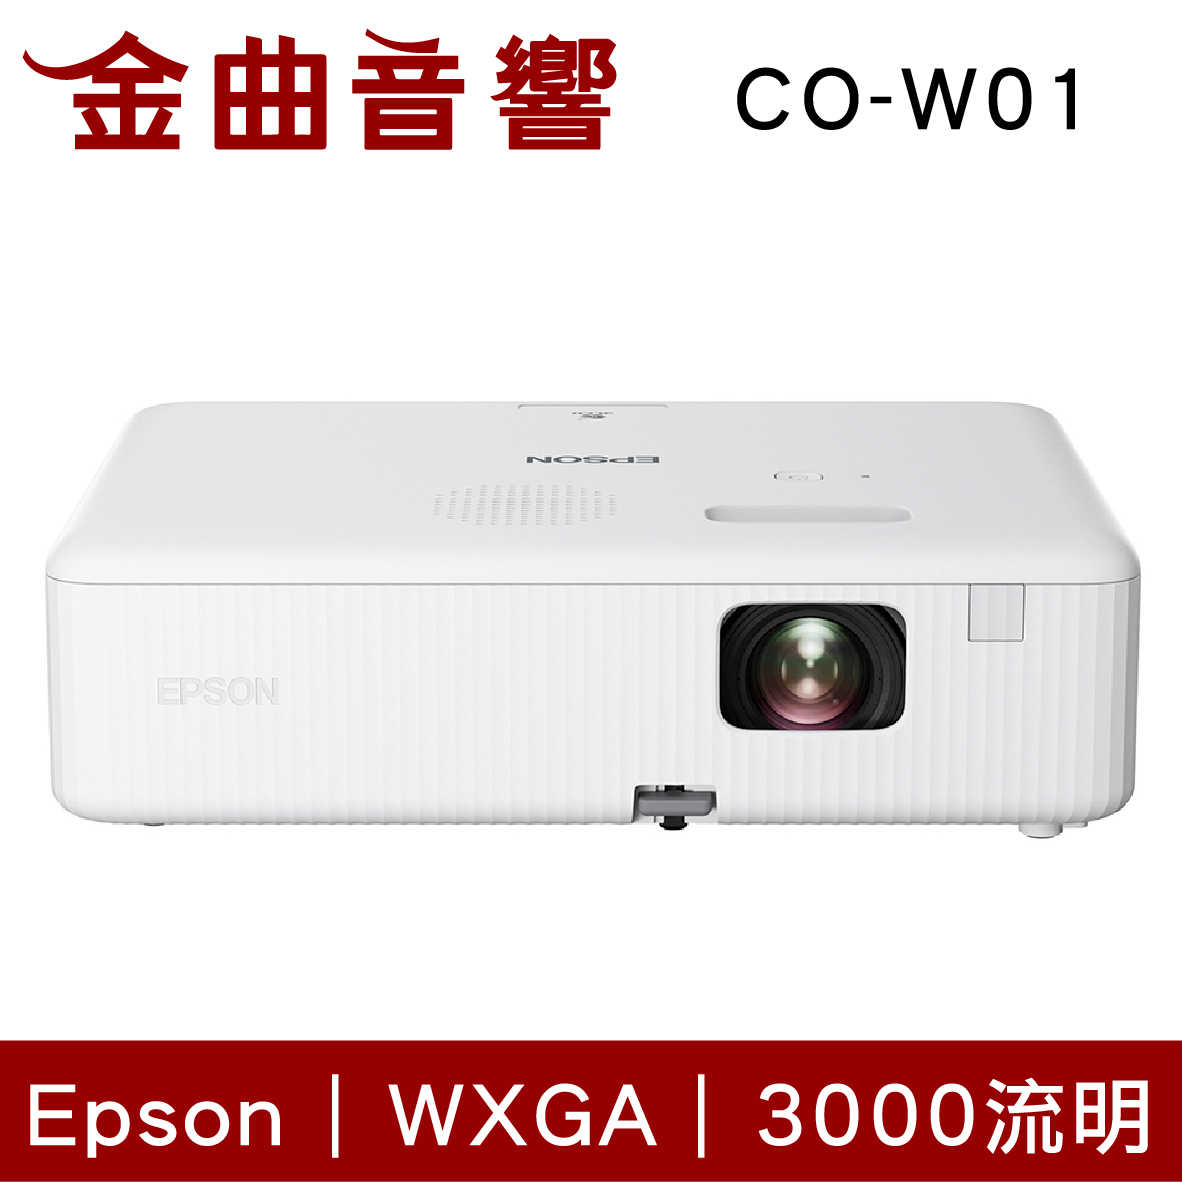 EPSON 愛普生 CO-W01 3000流明 5W喇叭 住商兩用 WXGA 投影機 | 金曲音響